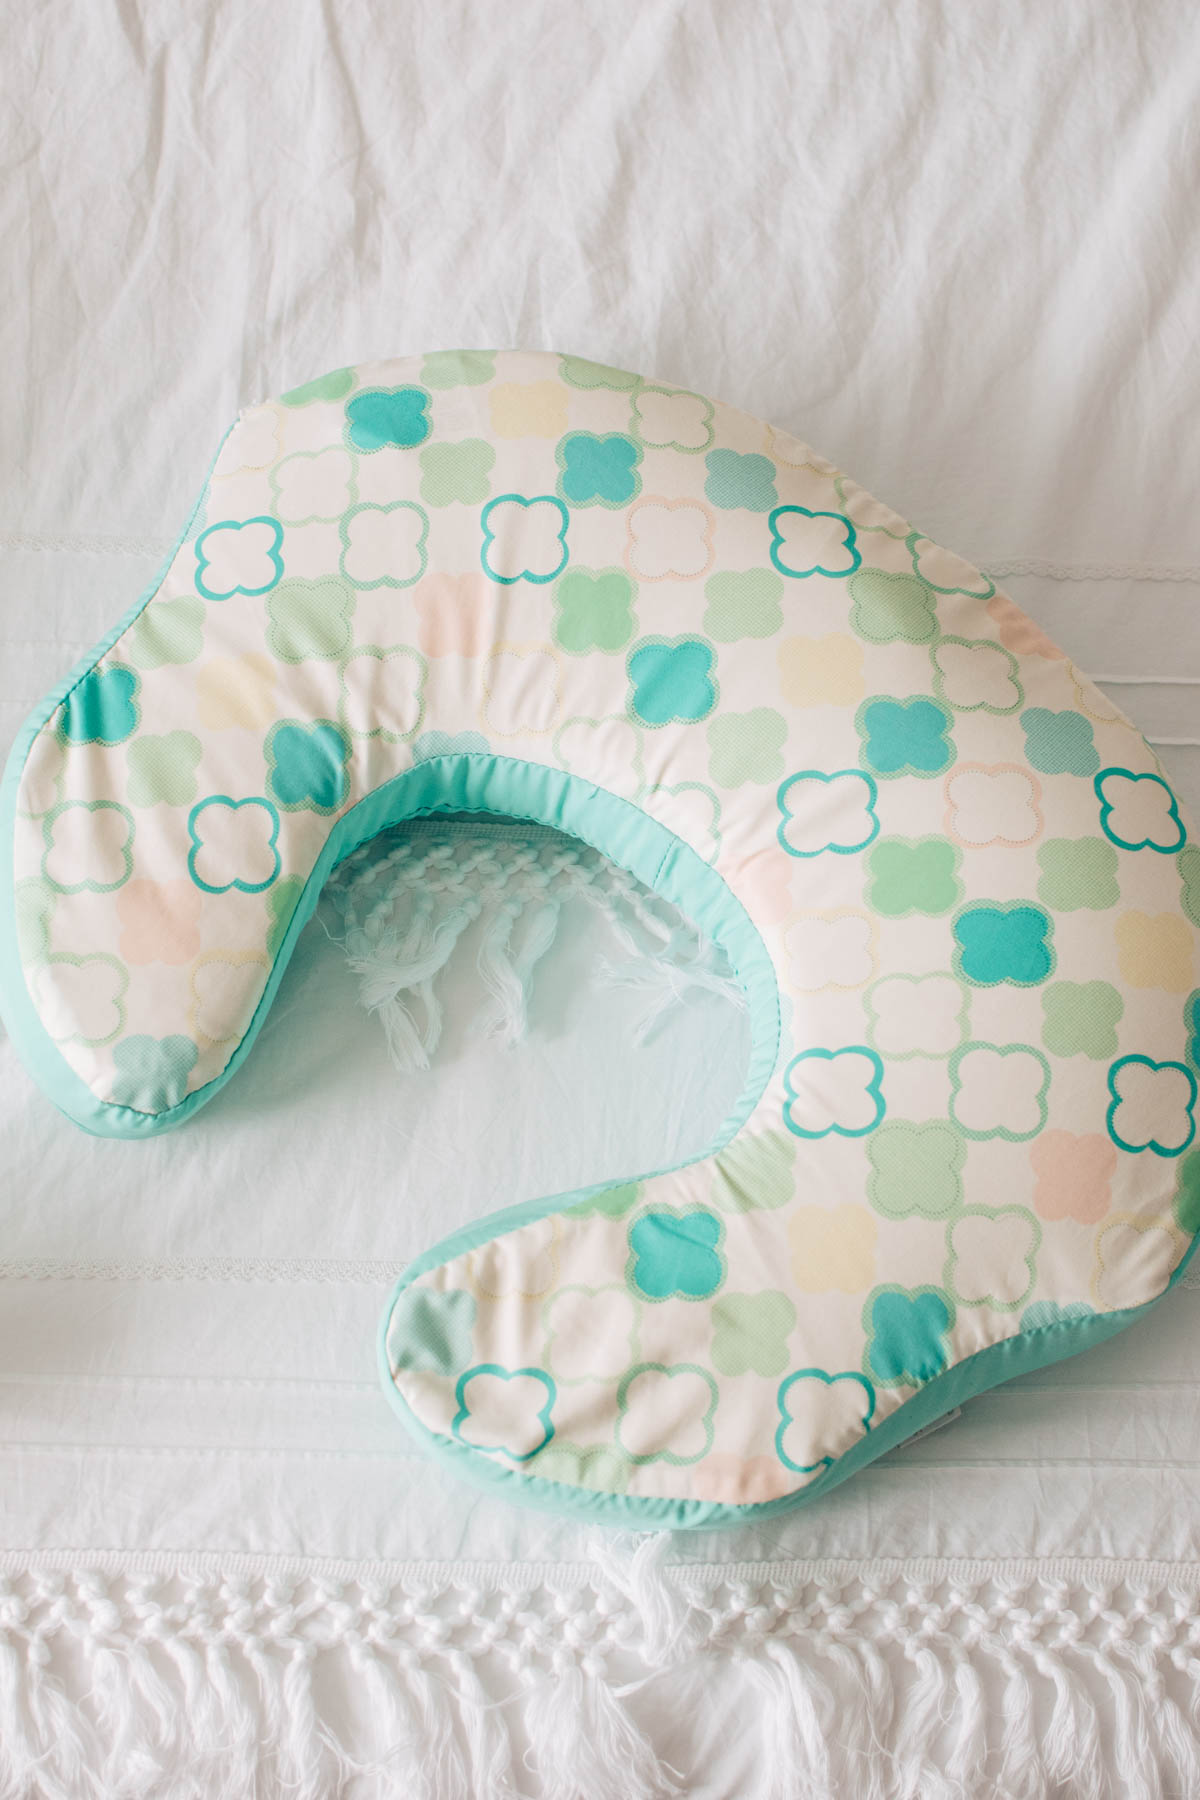 Nursing pillow with geometric pattern cover on white duvet cover.